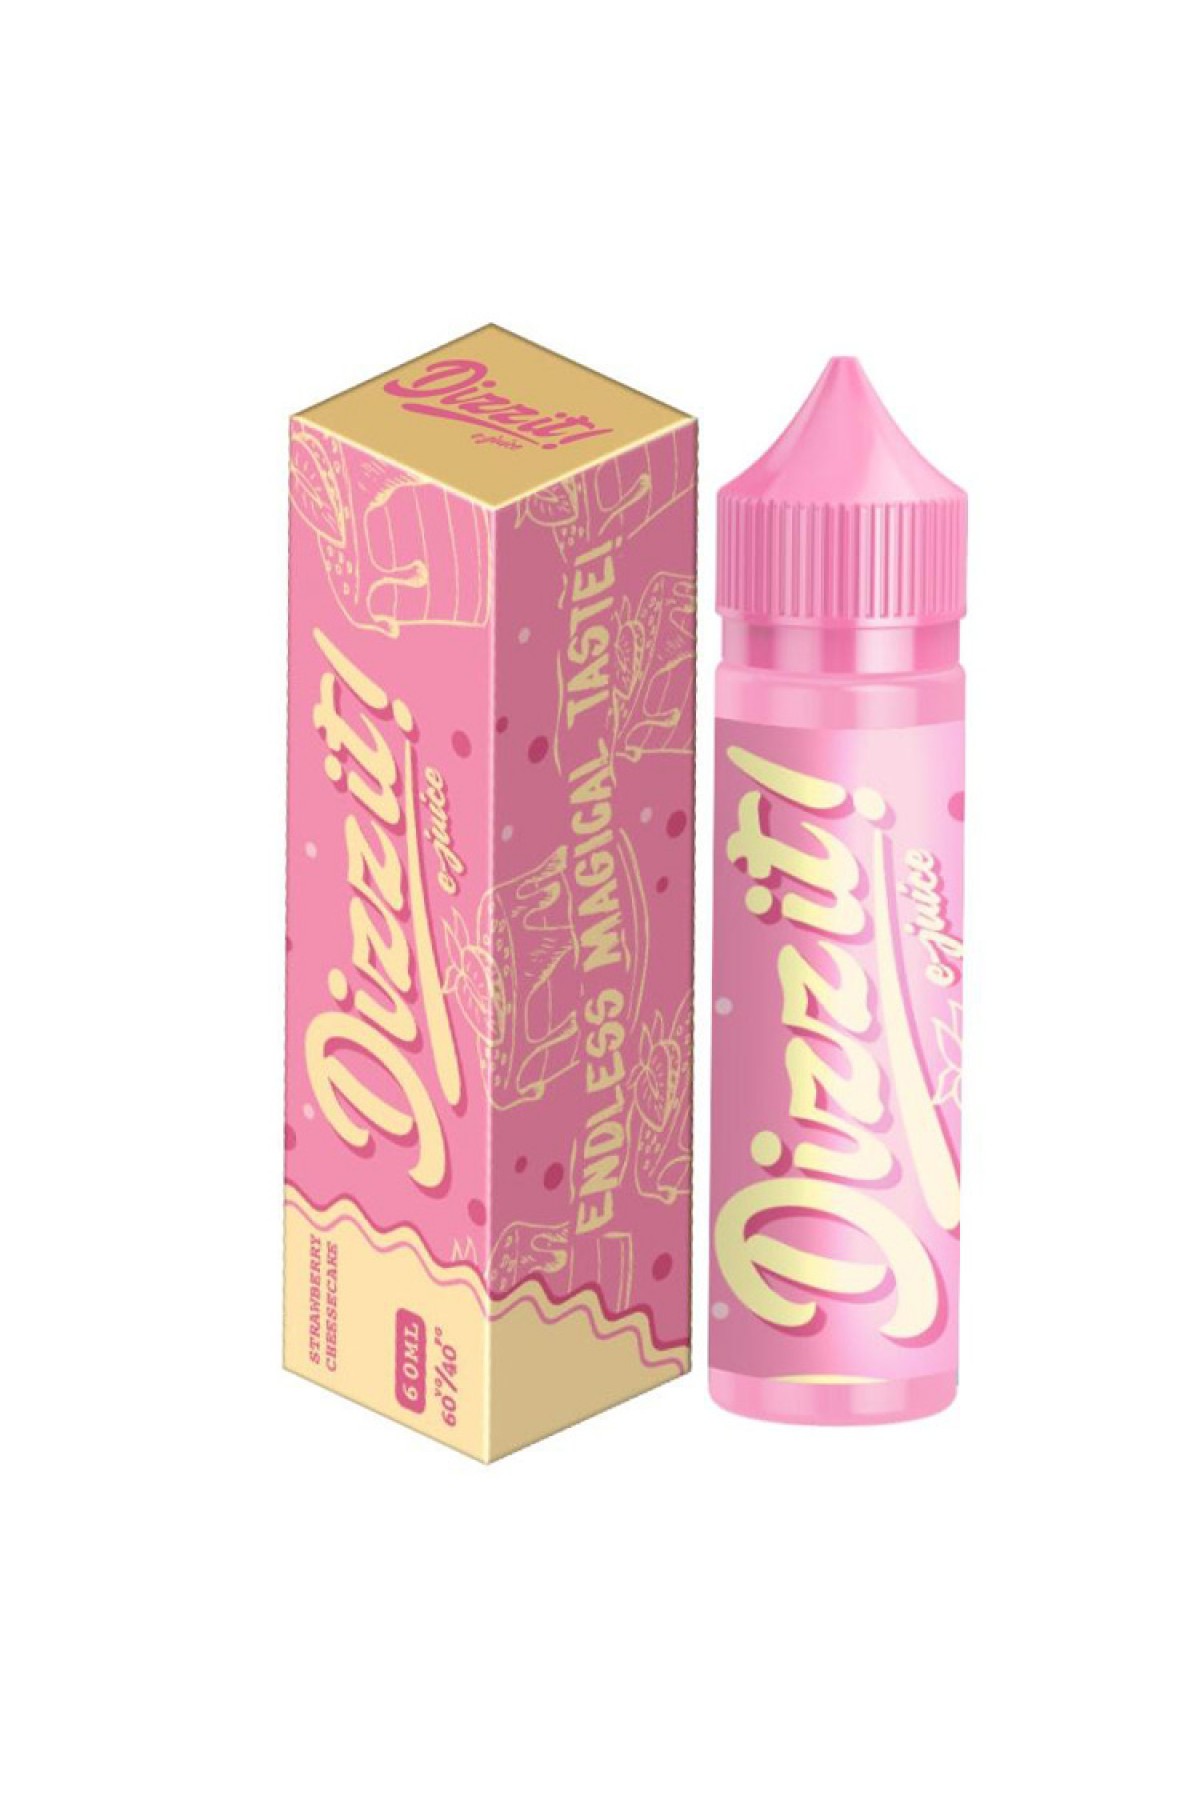 Dizzit E-Juice Strawberry Cheesecake Premium Likit (60ML)